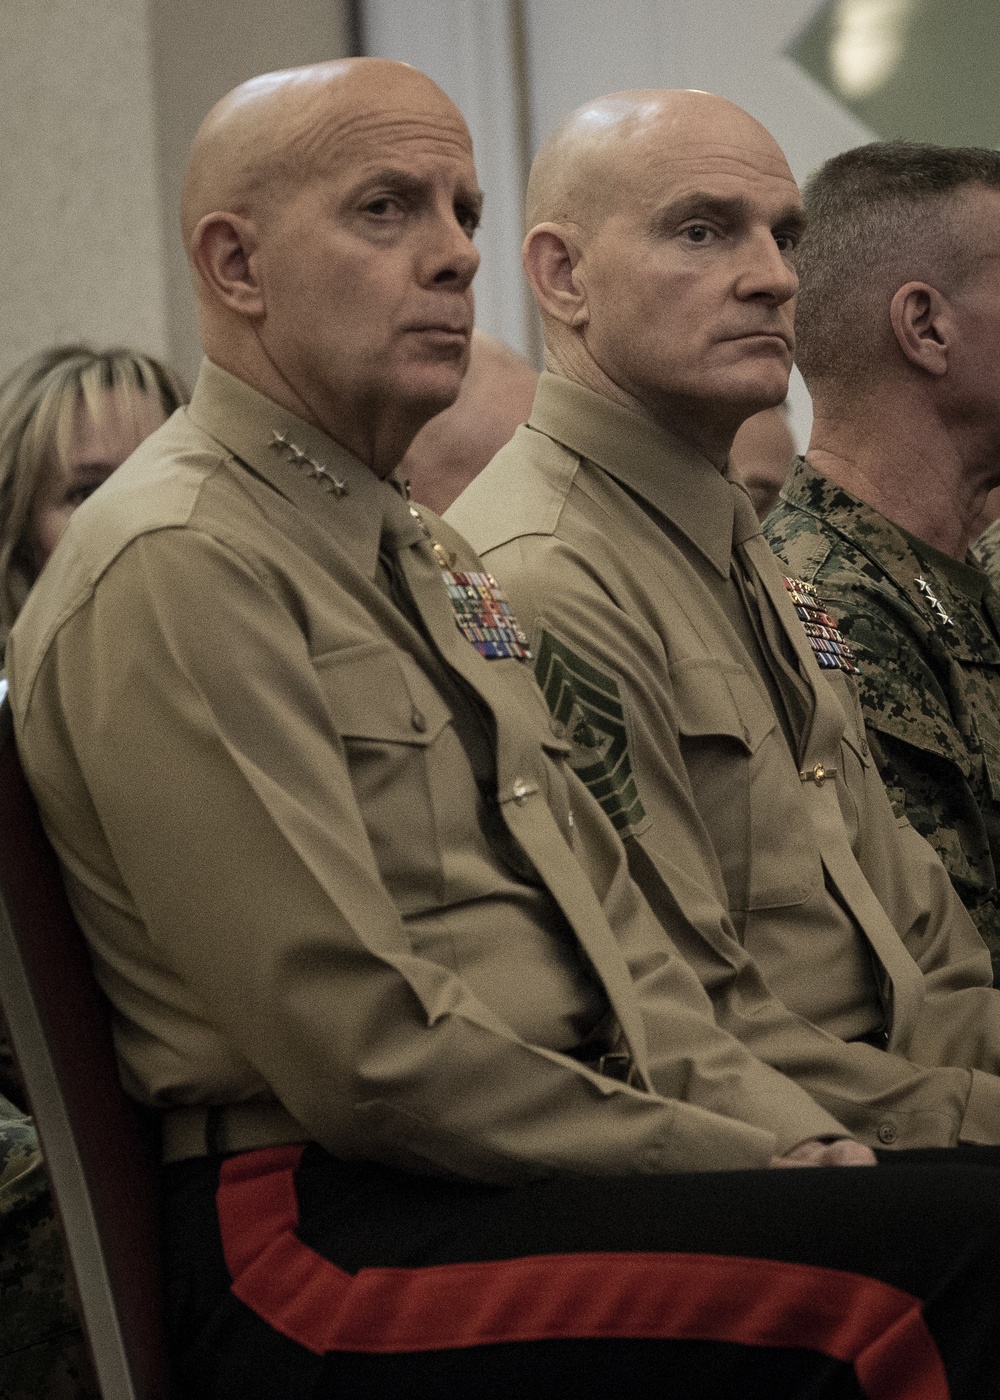 2020 Commandant of the Marine Corps Combined Award Ceremony